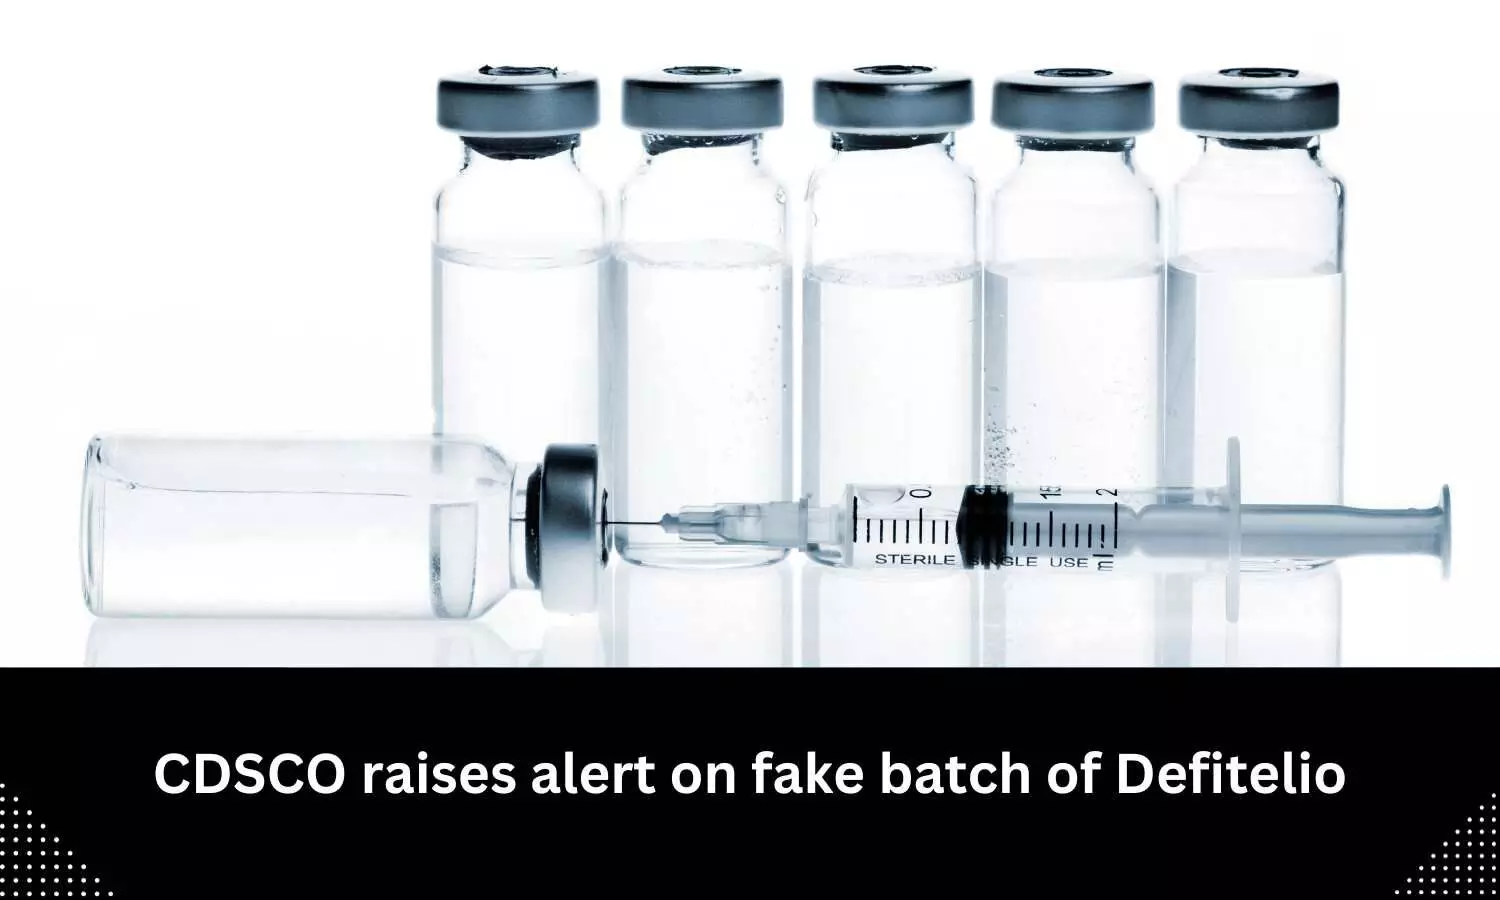 CDSCO raises alert on fake batch of Defitelio